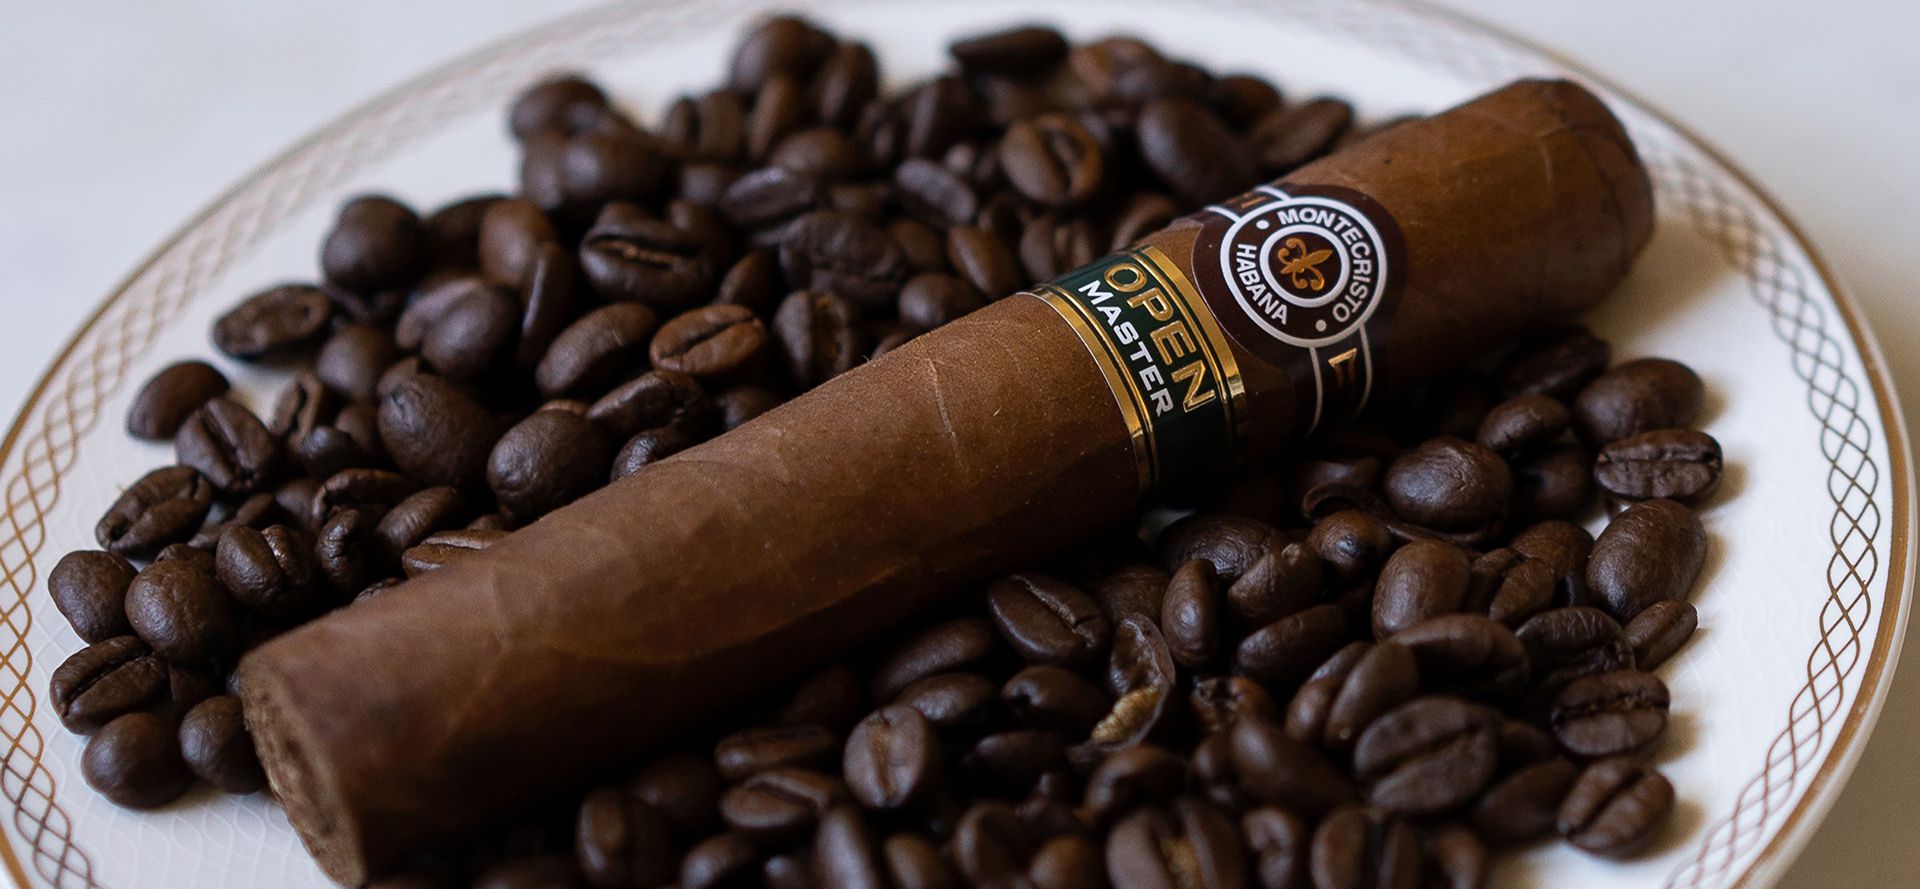 Montecristo Coffee Flavored Cigar.